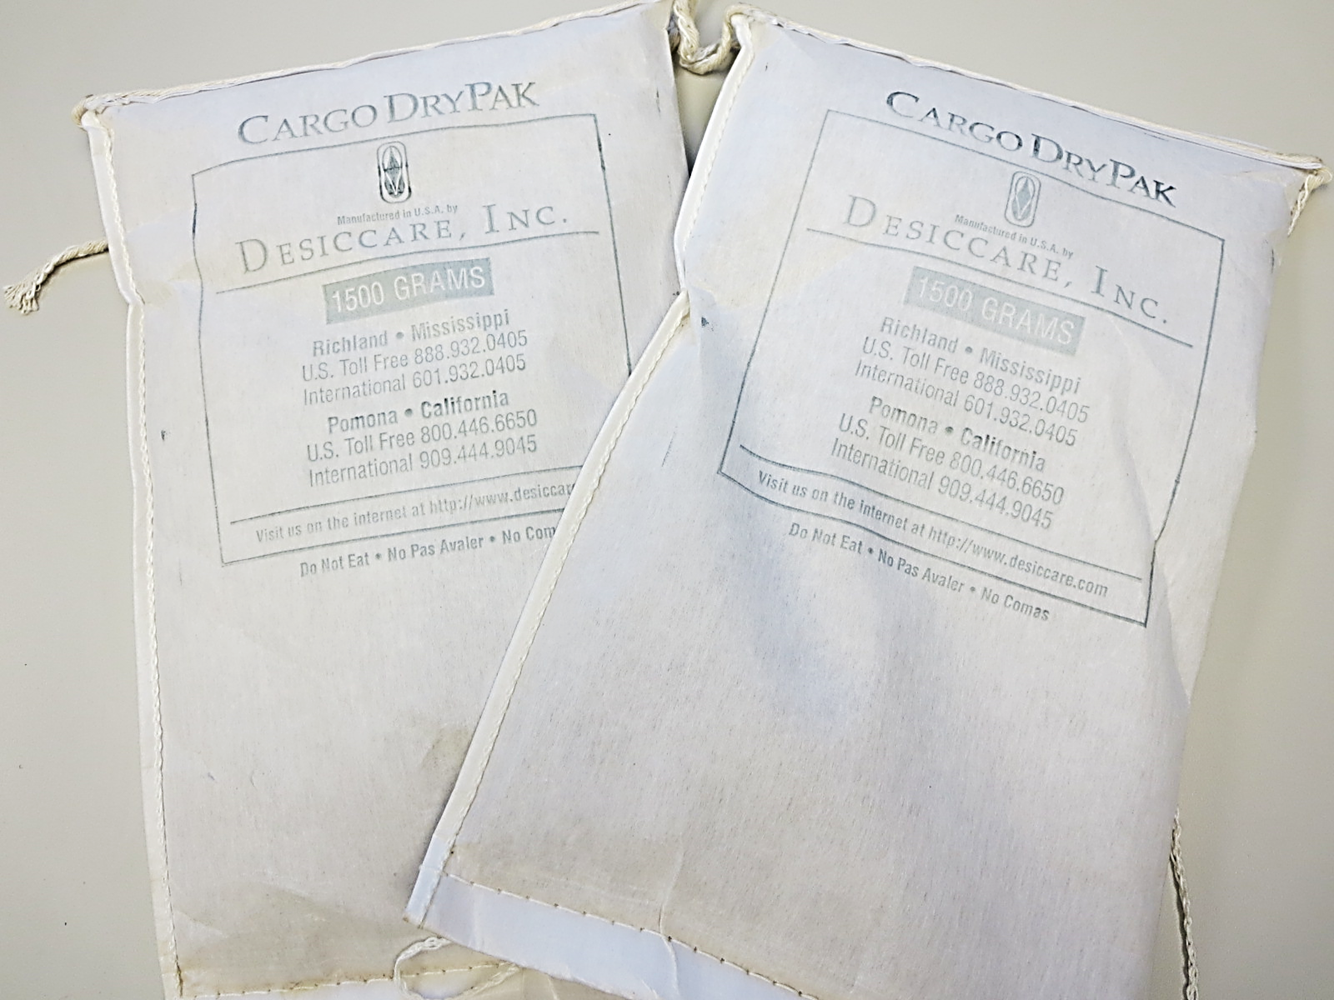 Desiccare CARGO DRY PAKS 1500 gram Moisture Absorber Bags